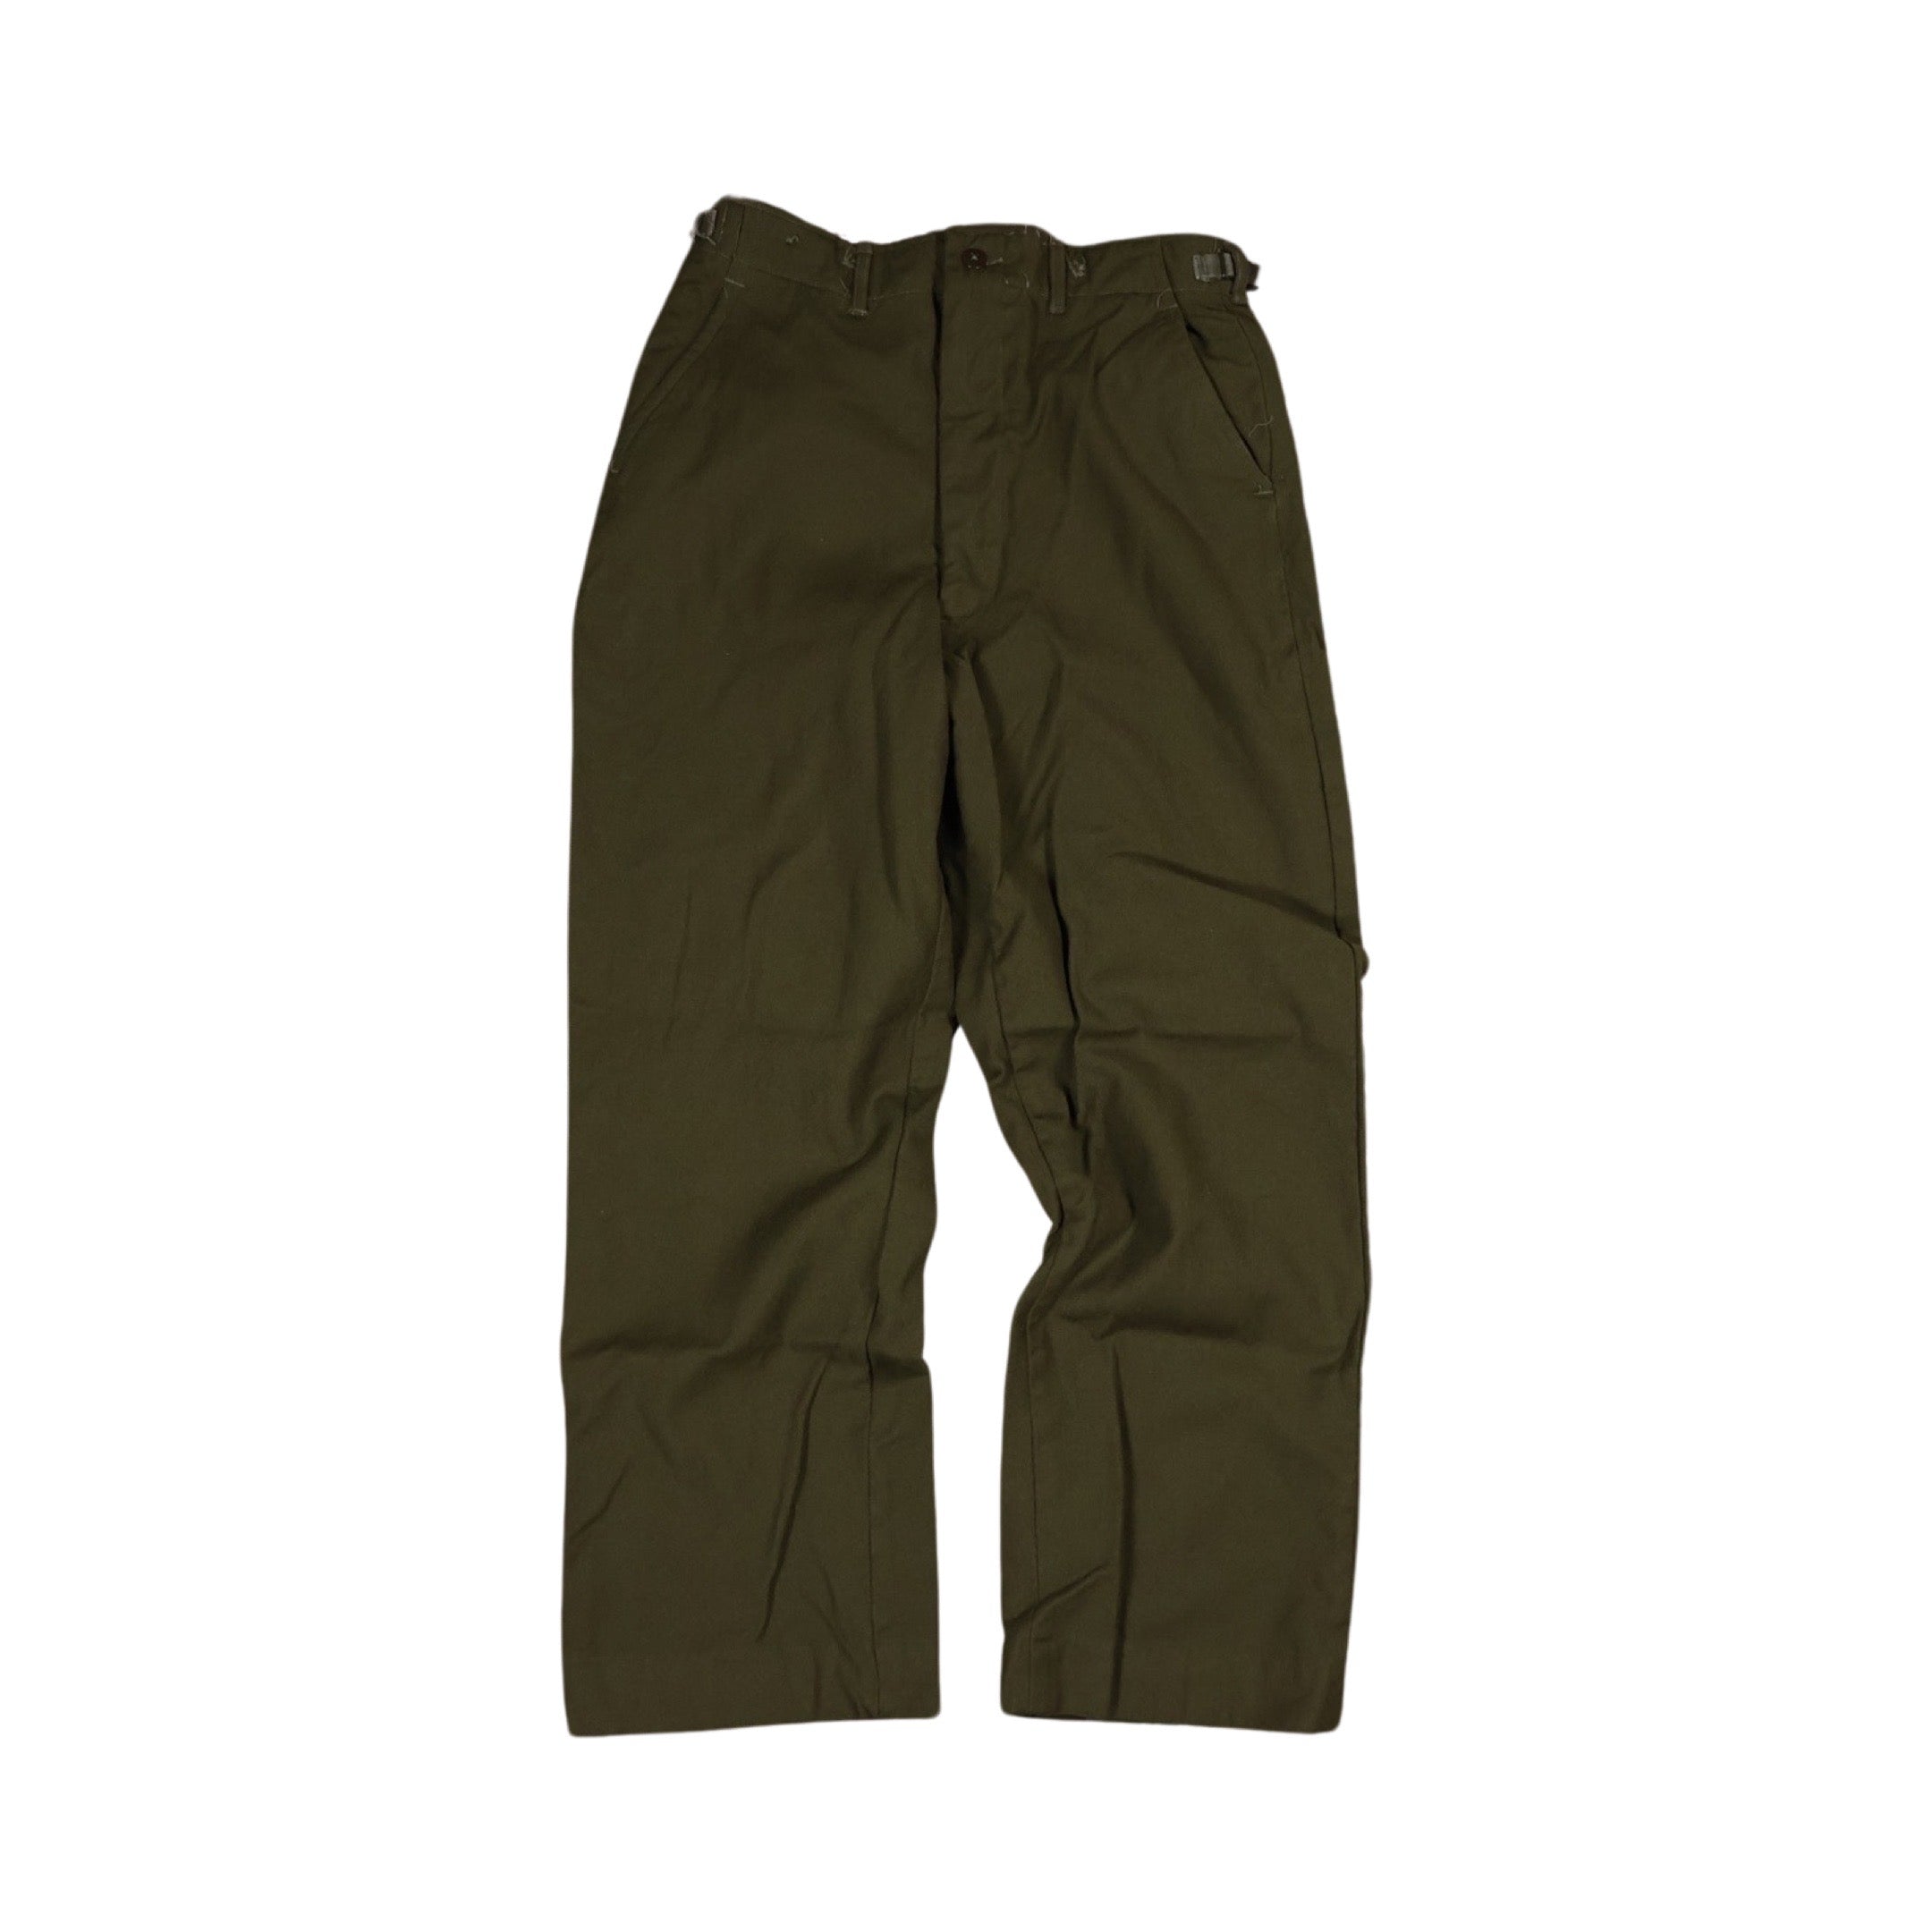 Green Military Wool Pants 70s Essential (28”)